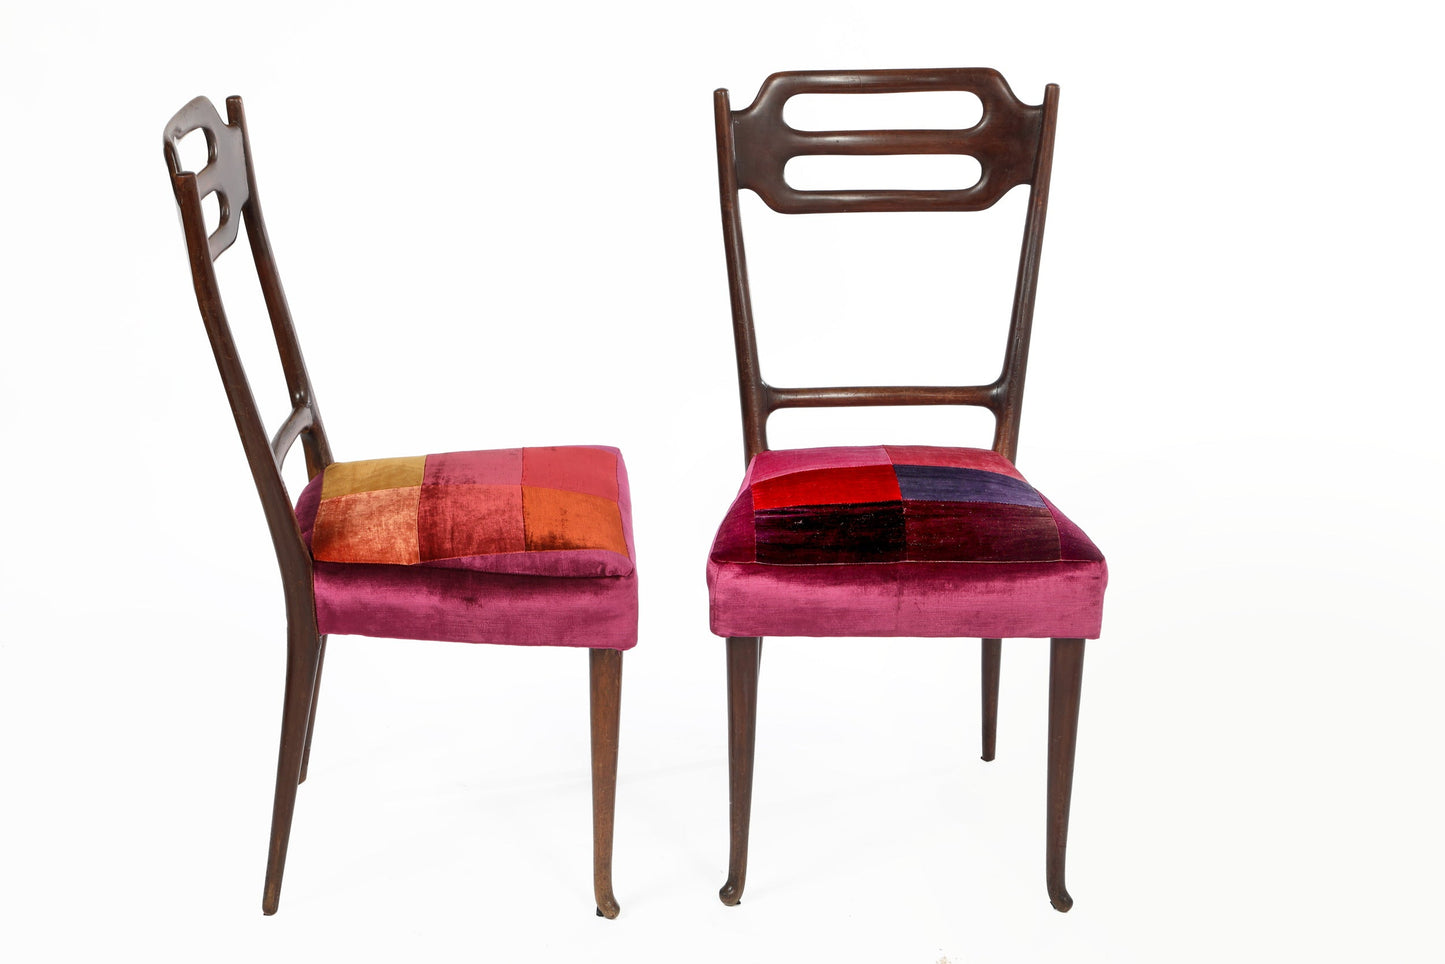 Pair of 1950s chairs reinterpreted by Triplef